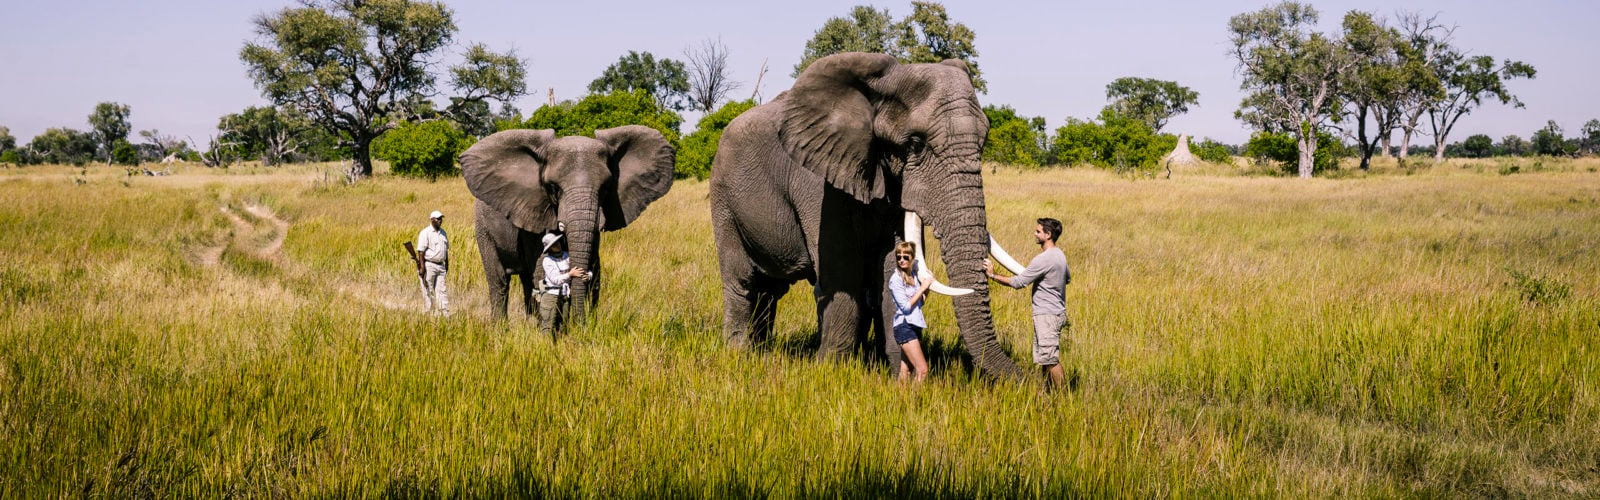 botswana-stanleys-camp-elephant-walking-safari